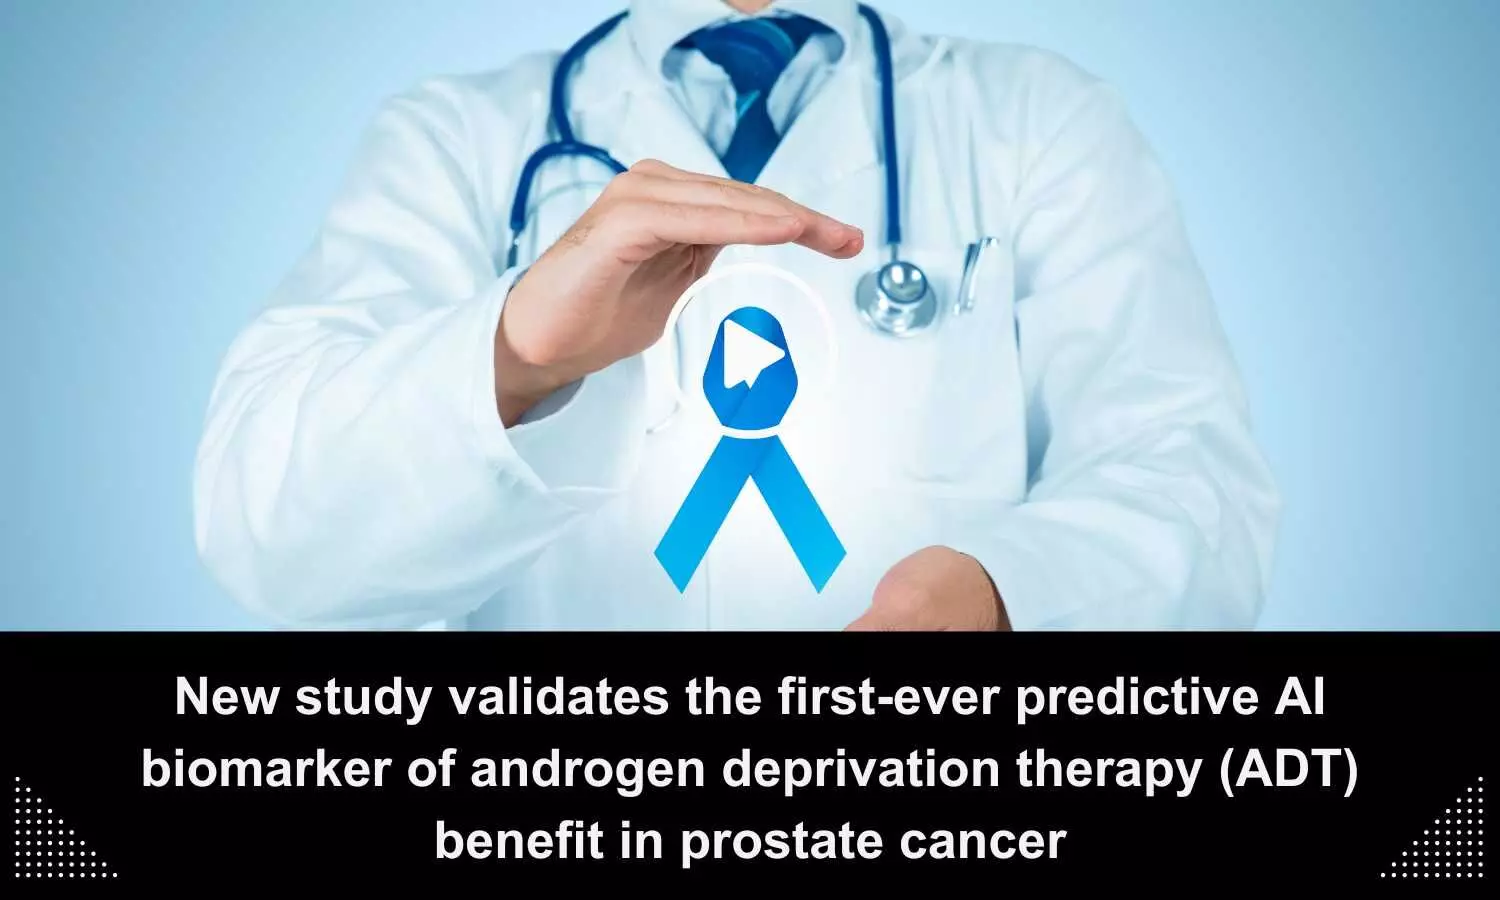 AI Unlocks Prostate Cancer Treatment Benefits